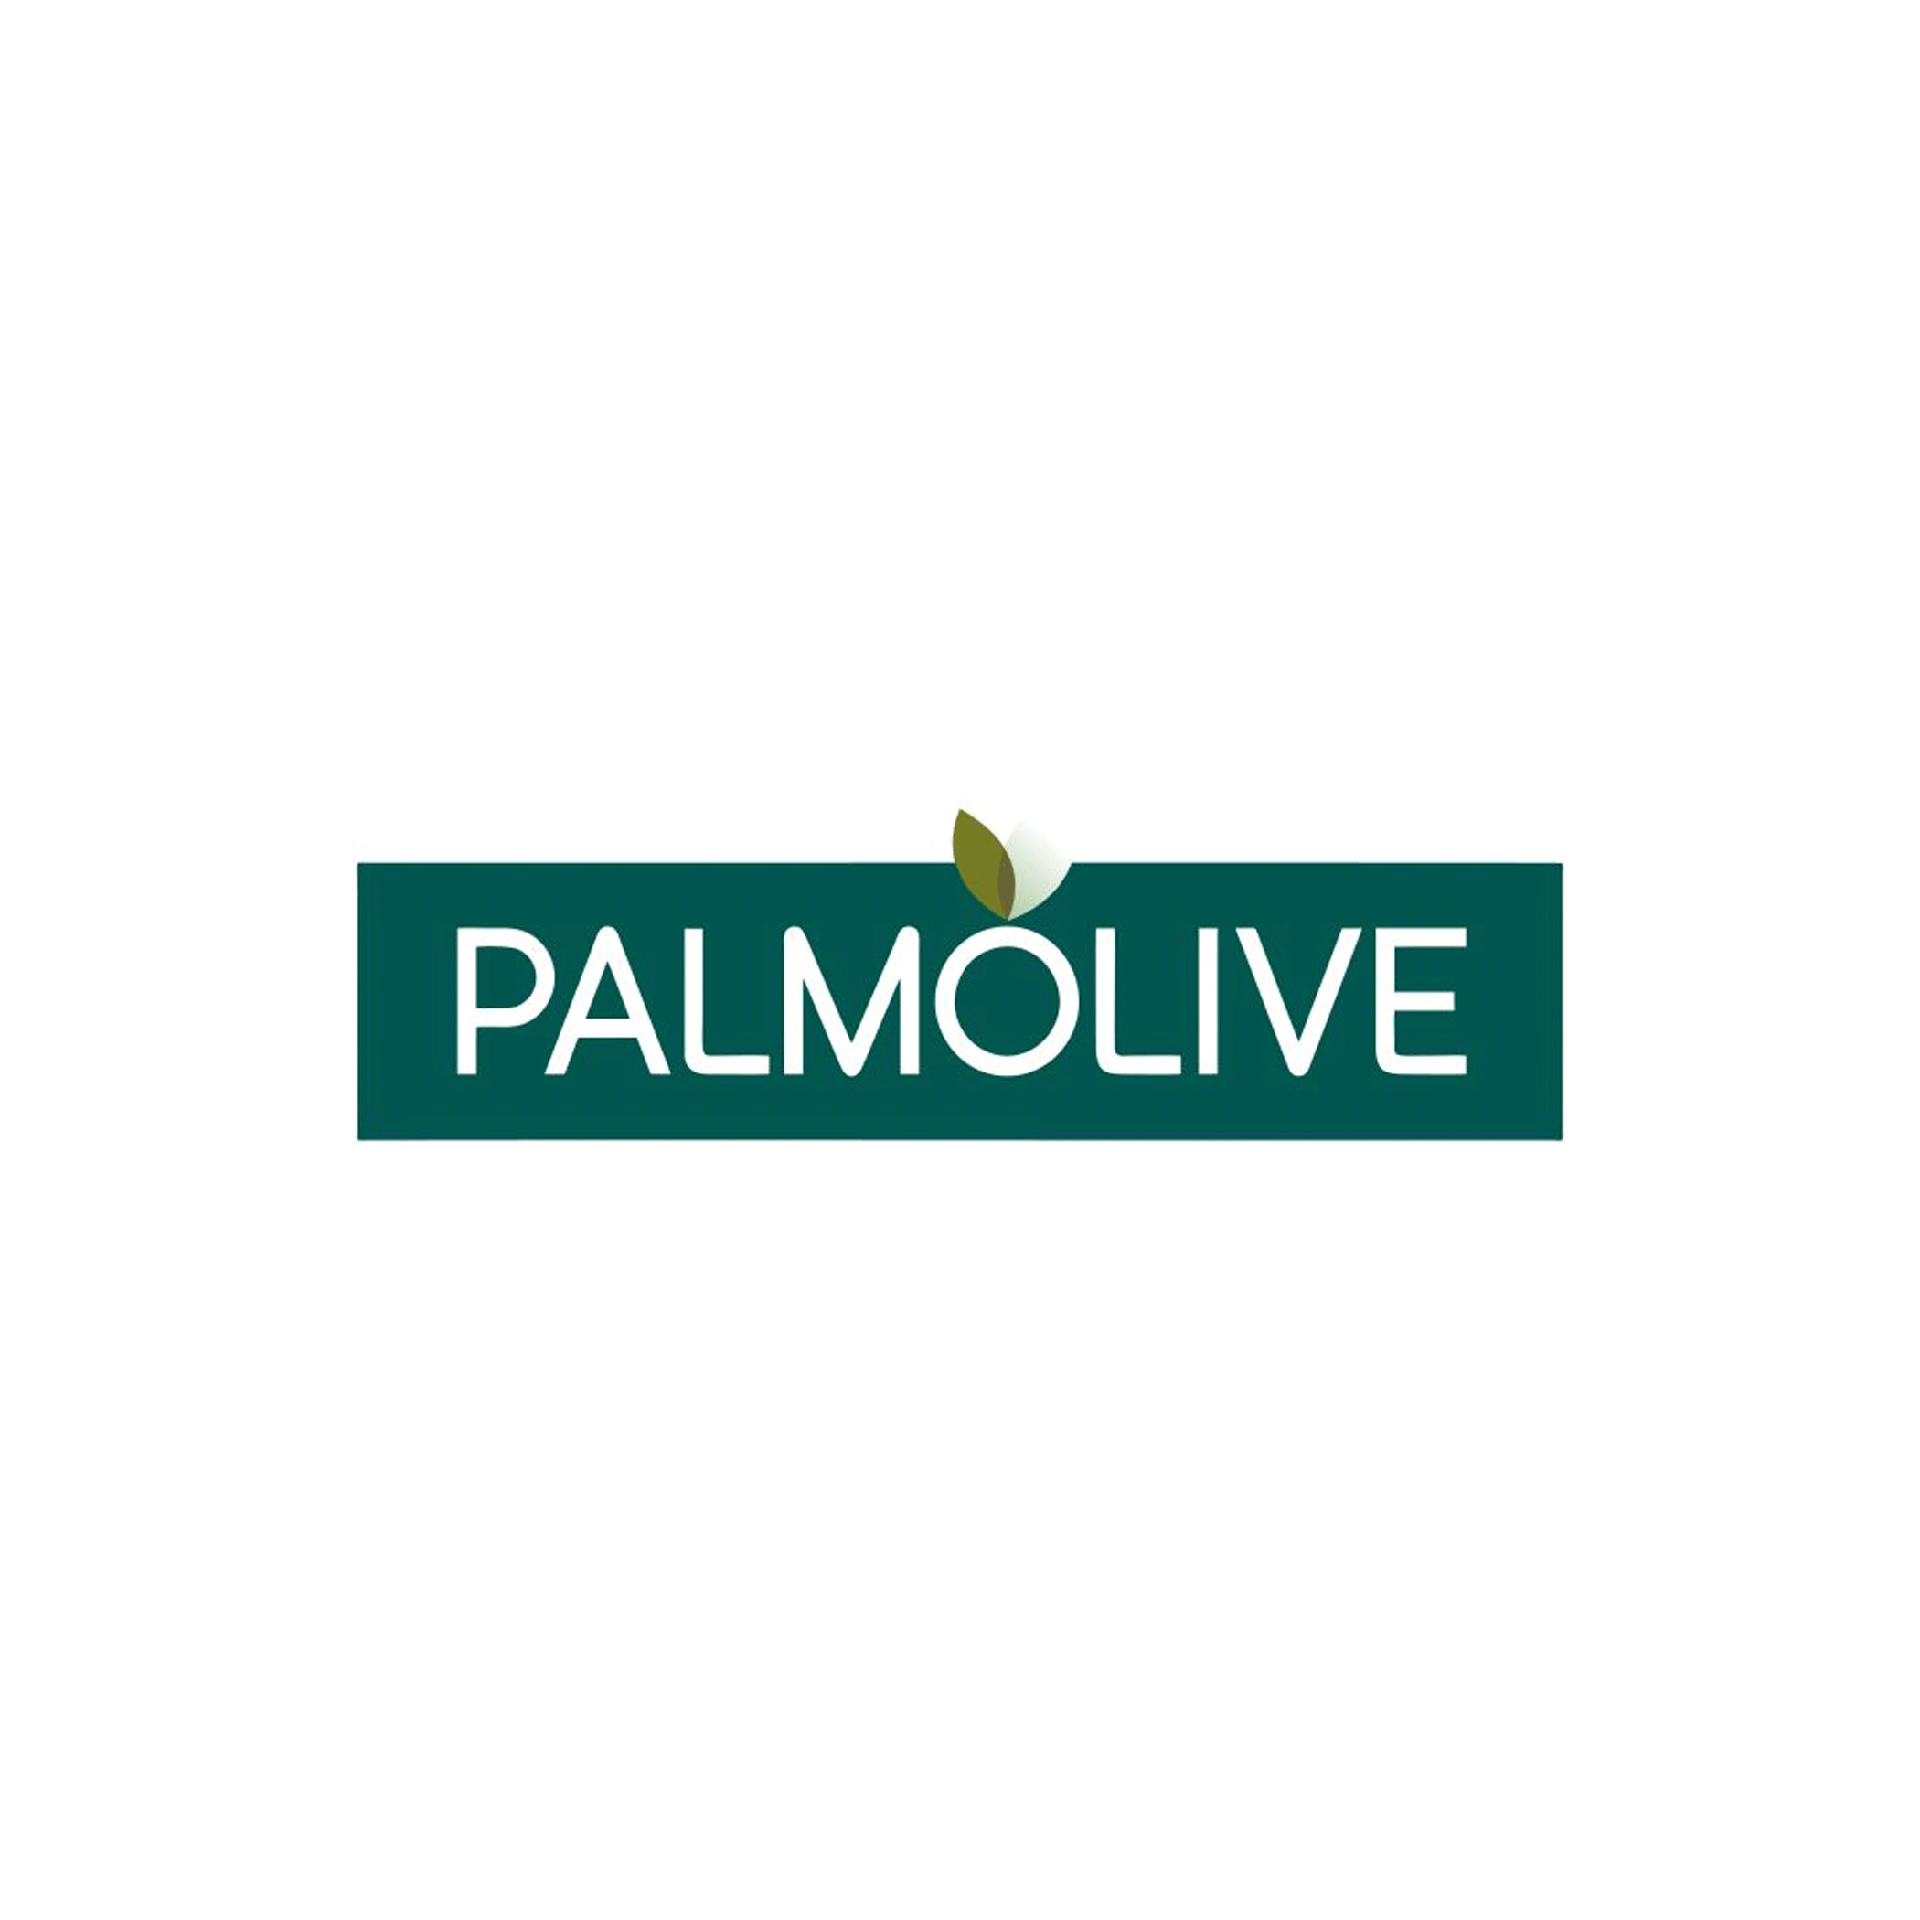 Product Brand: Palmolive